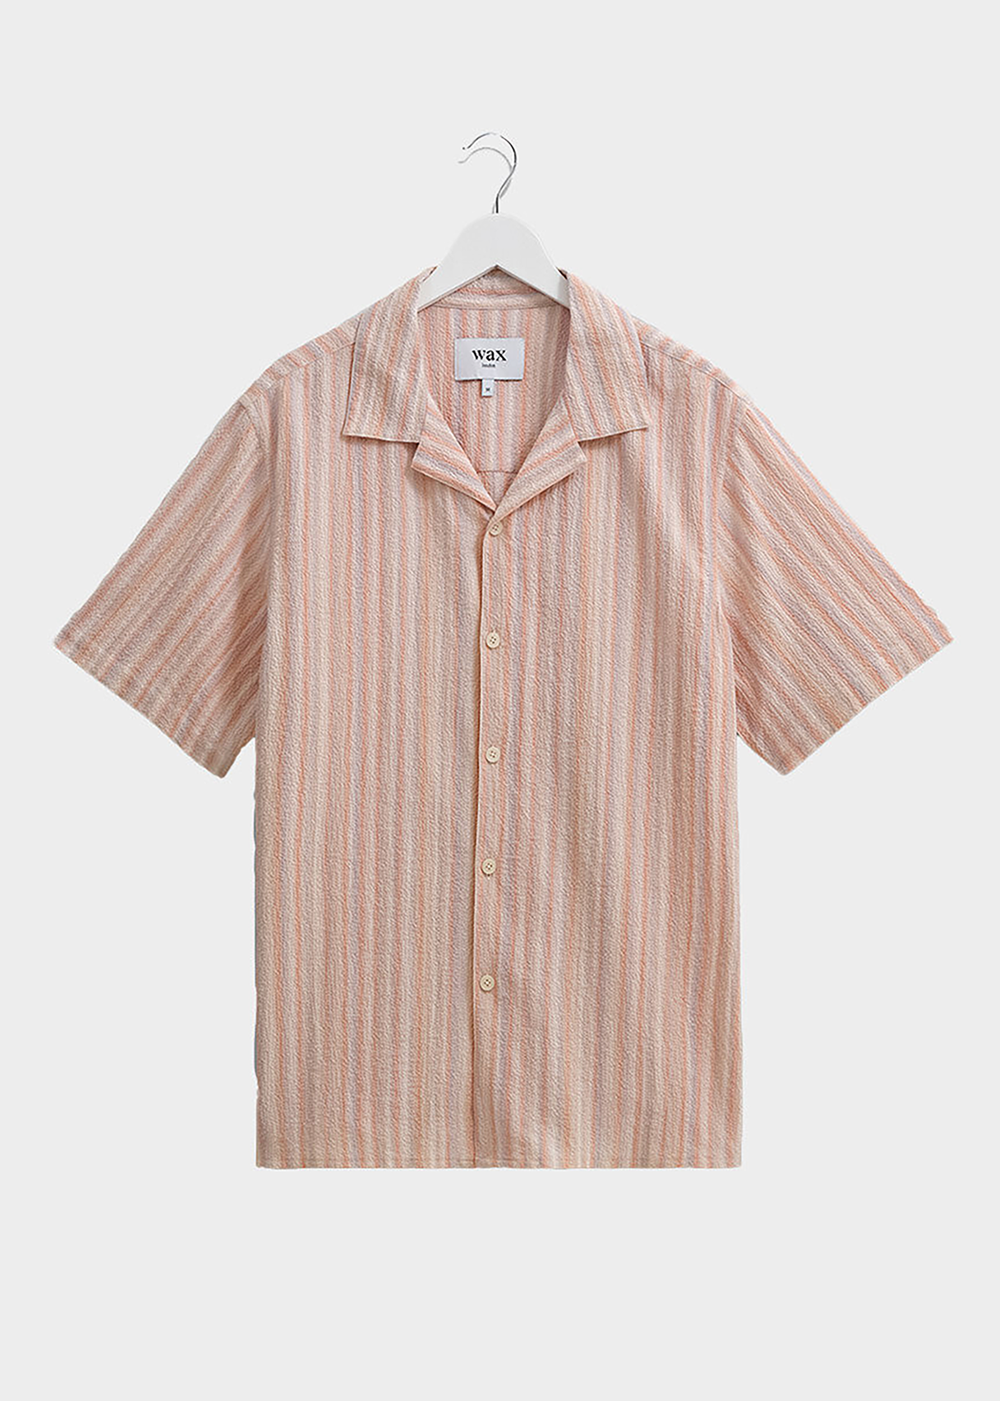 Didcot Shirt Pastel Stripe - Wax London - Danali